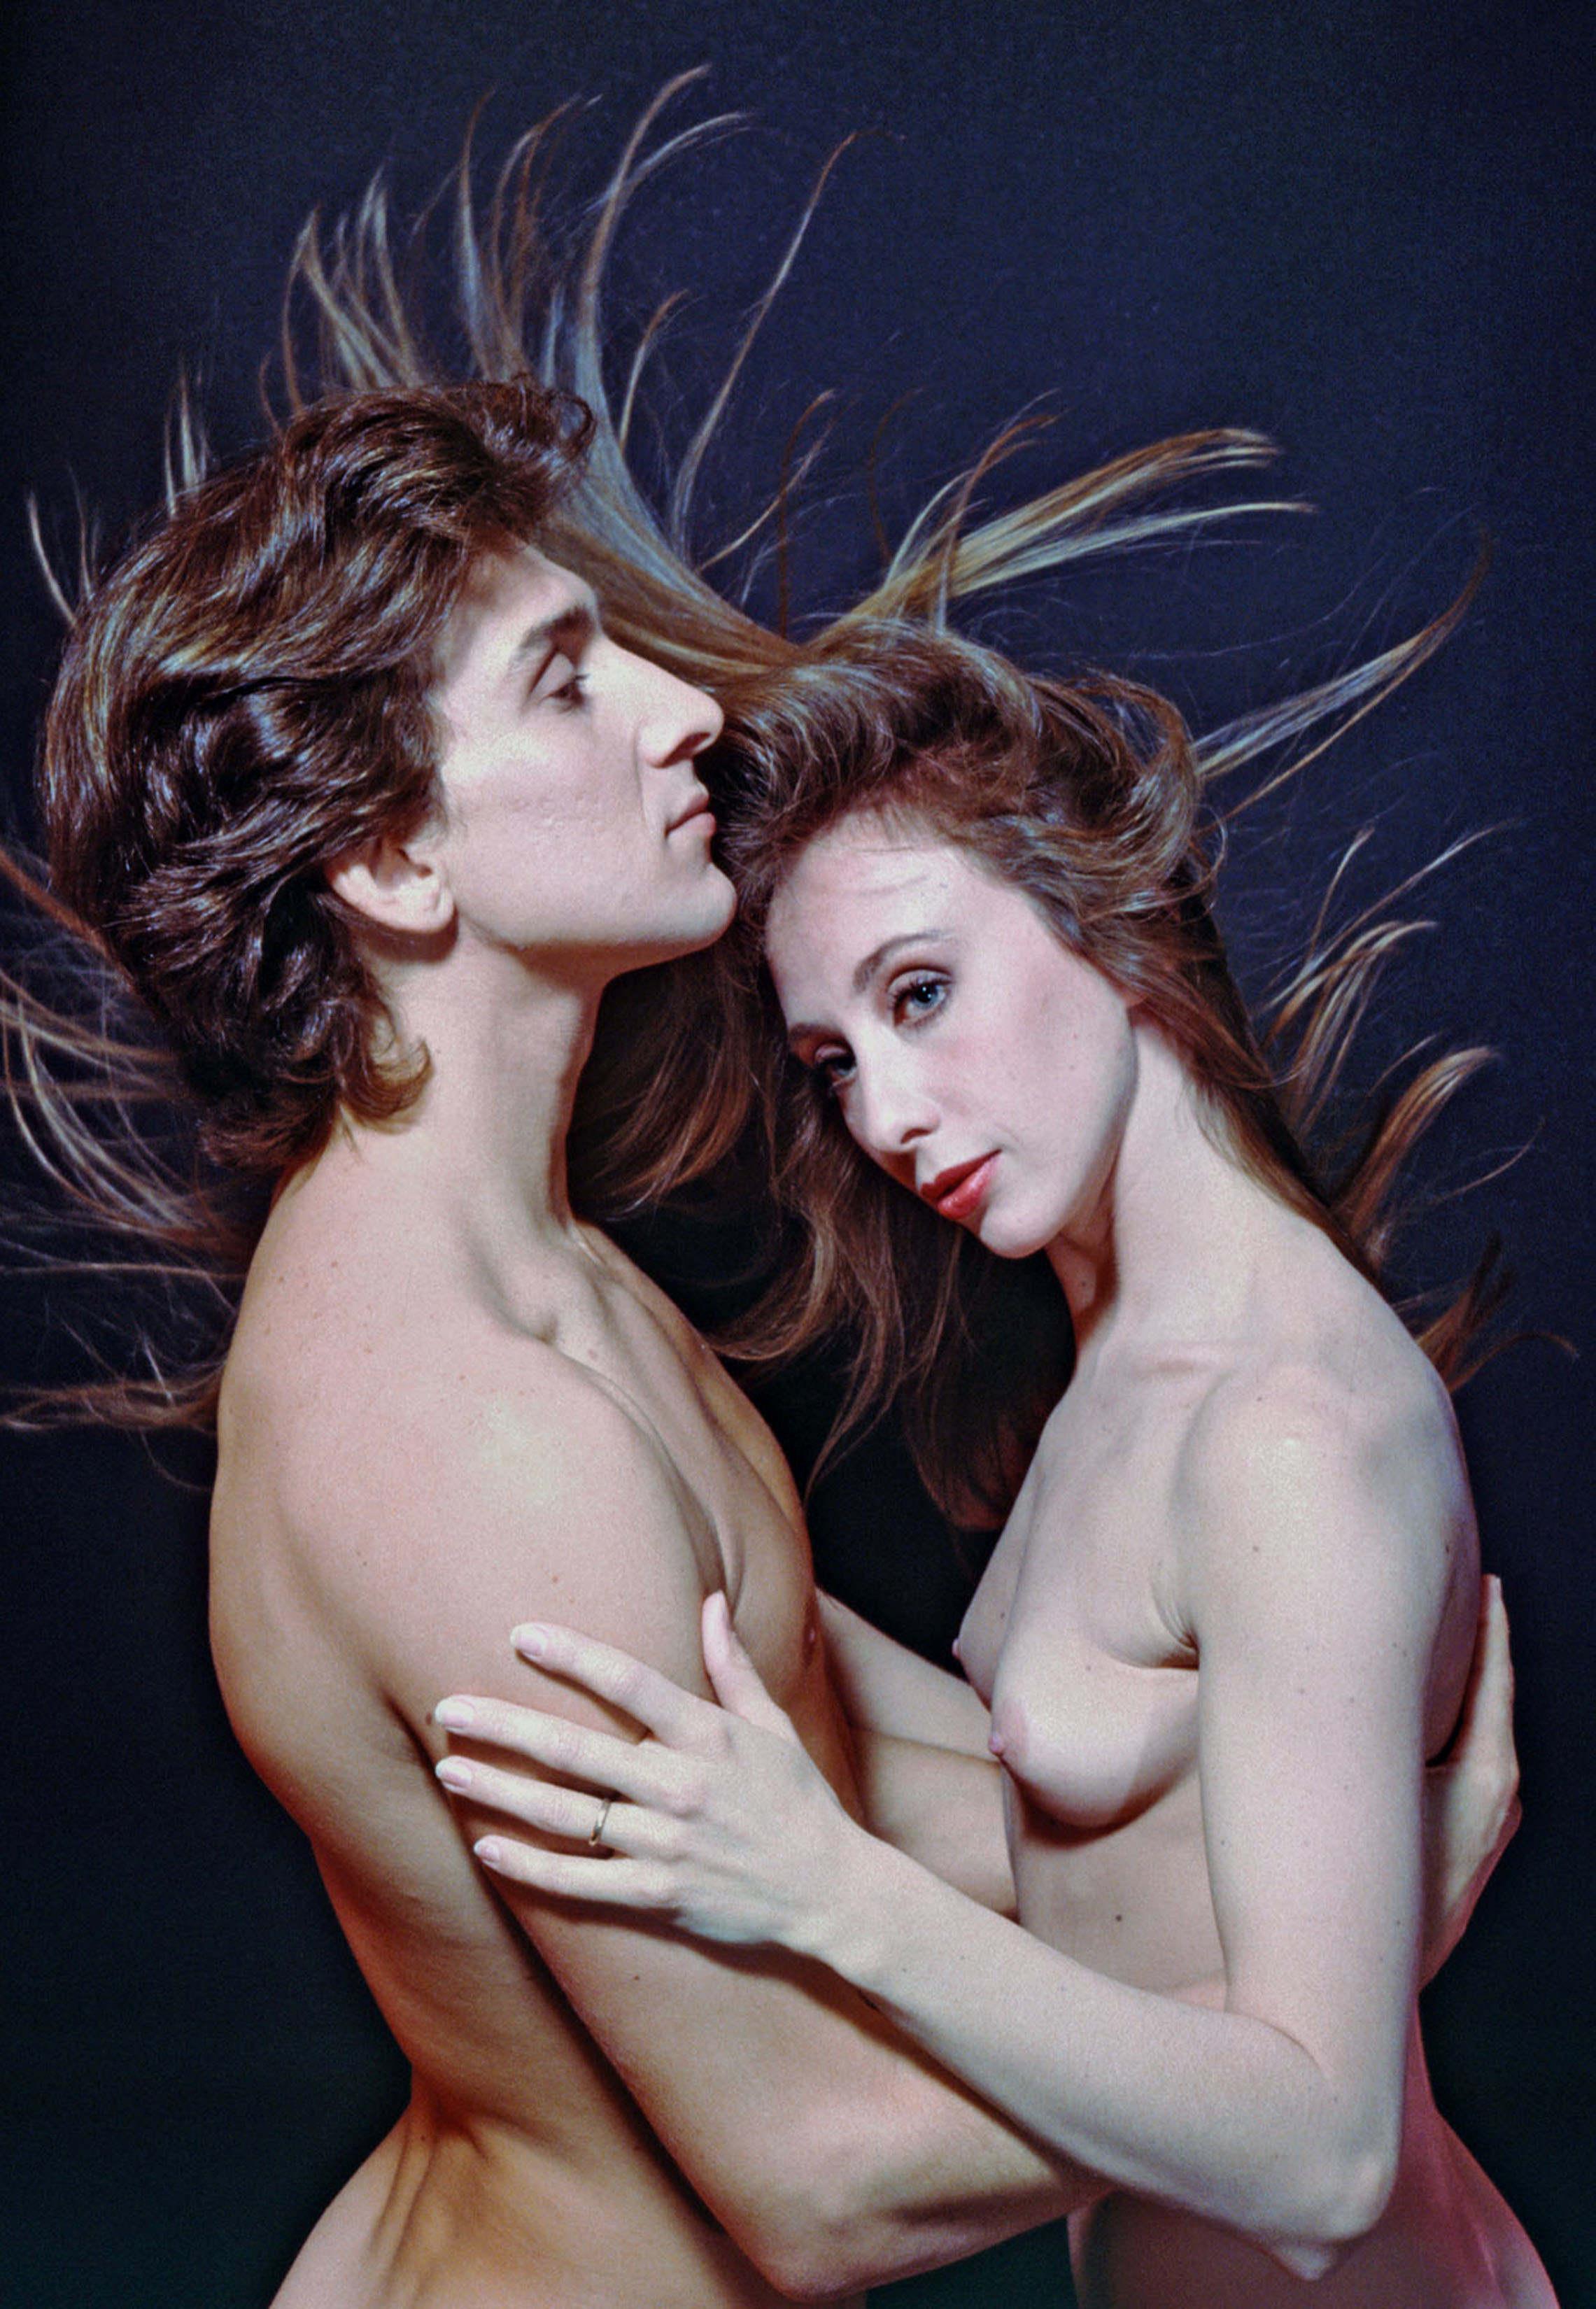 Jack Mitchell Color Photograph - Famed dancers Julio Bocca & Eleonora Cassano nude for 'Playboy' magazine